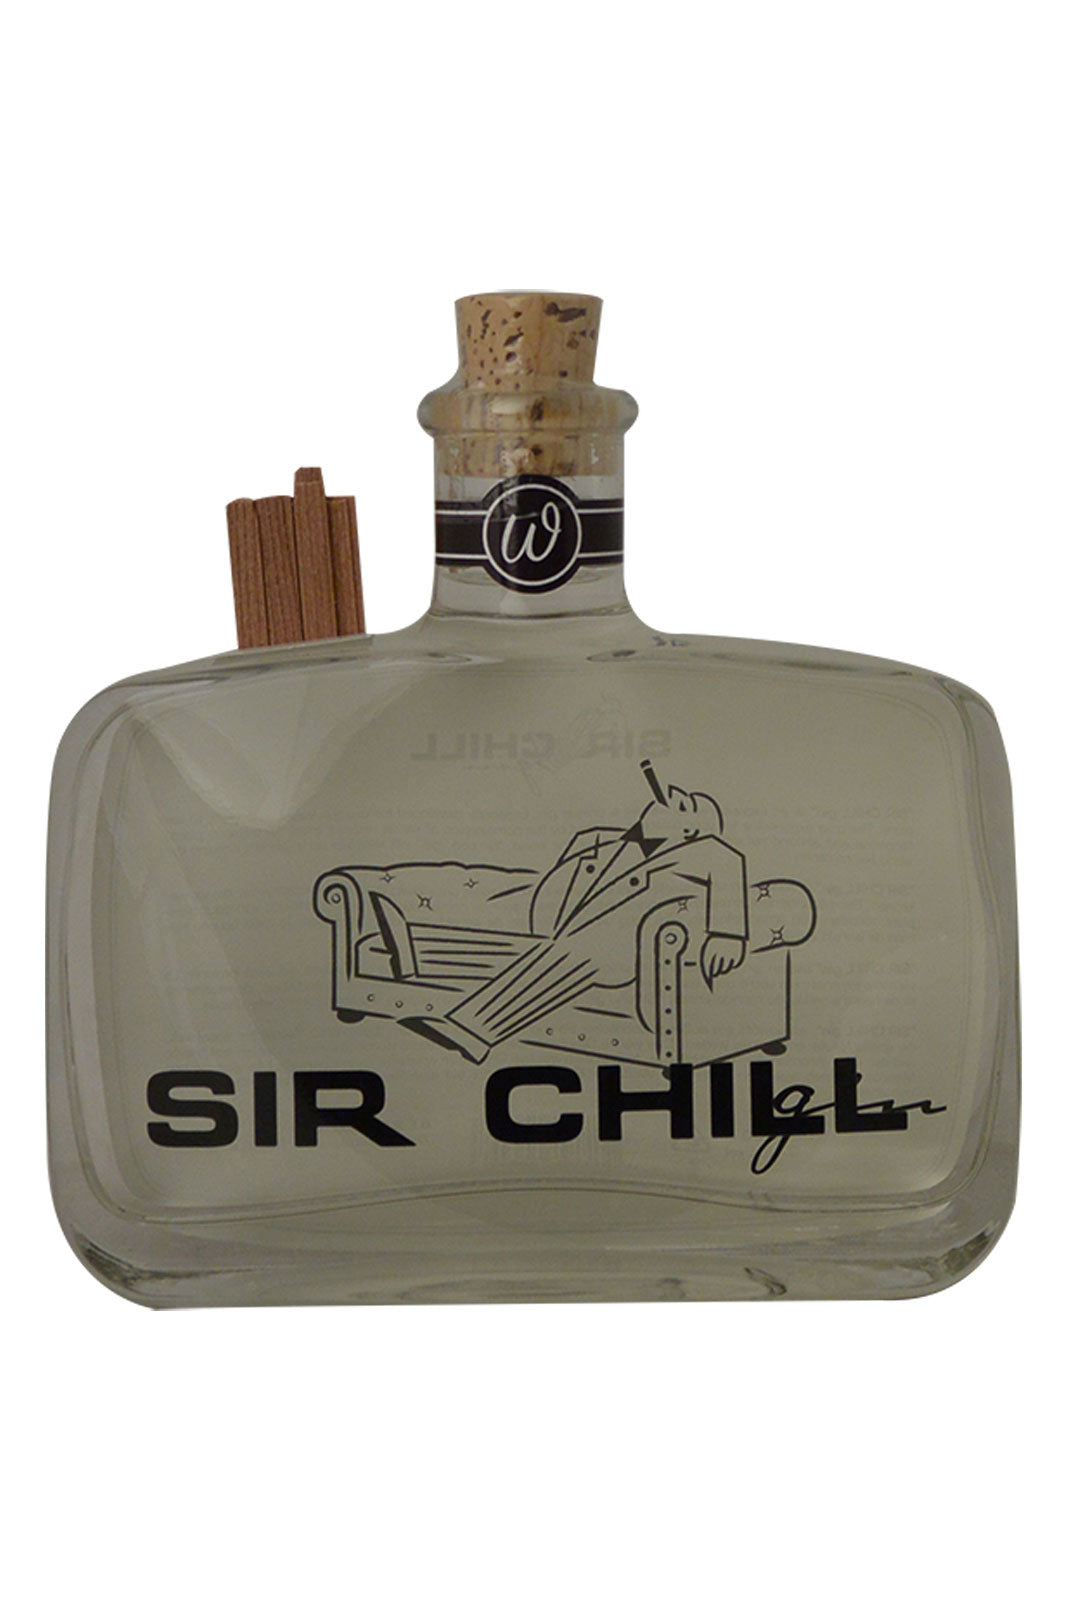 Sir Chill Gin